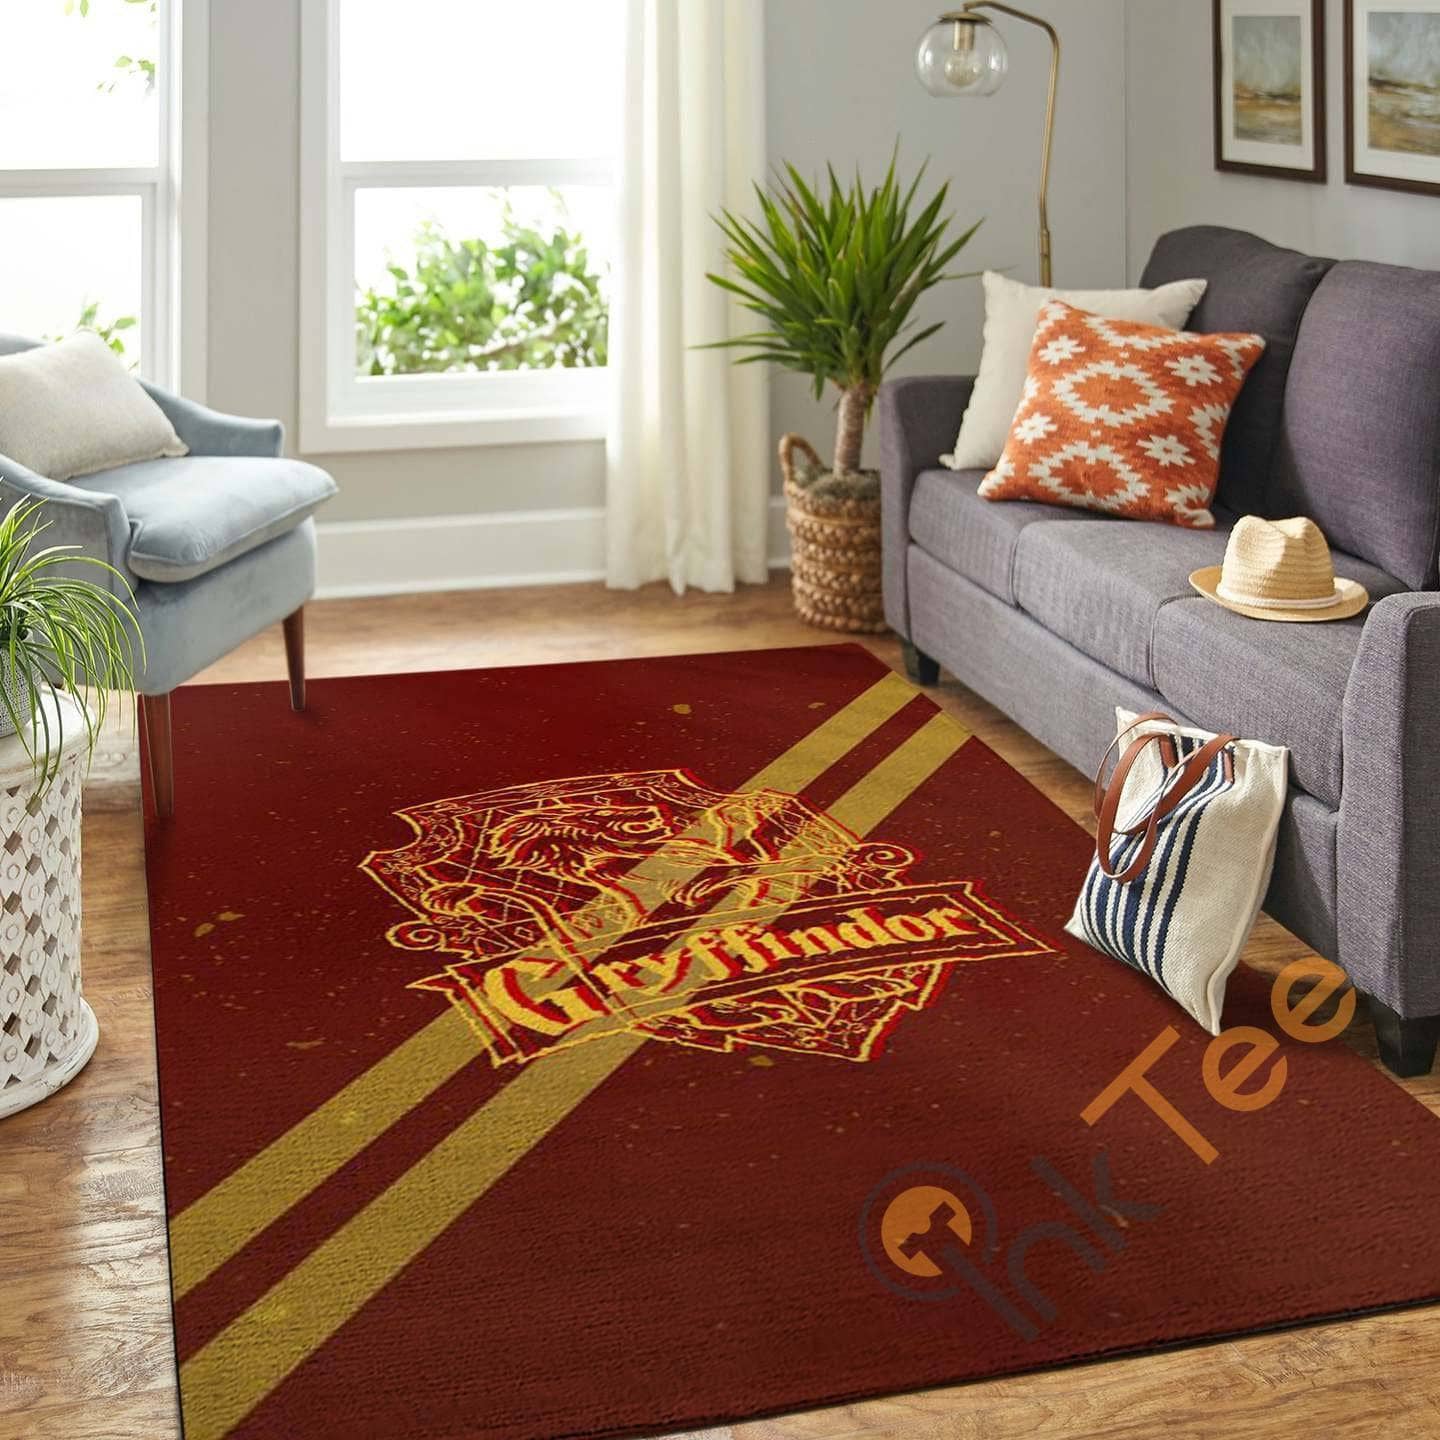 Harry Potter Gryffindor Living Room Carpet Floor Decor Beautiful Gift For Fan Rug